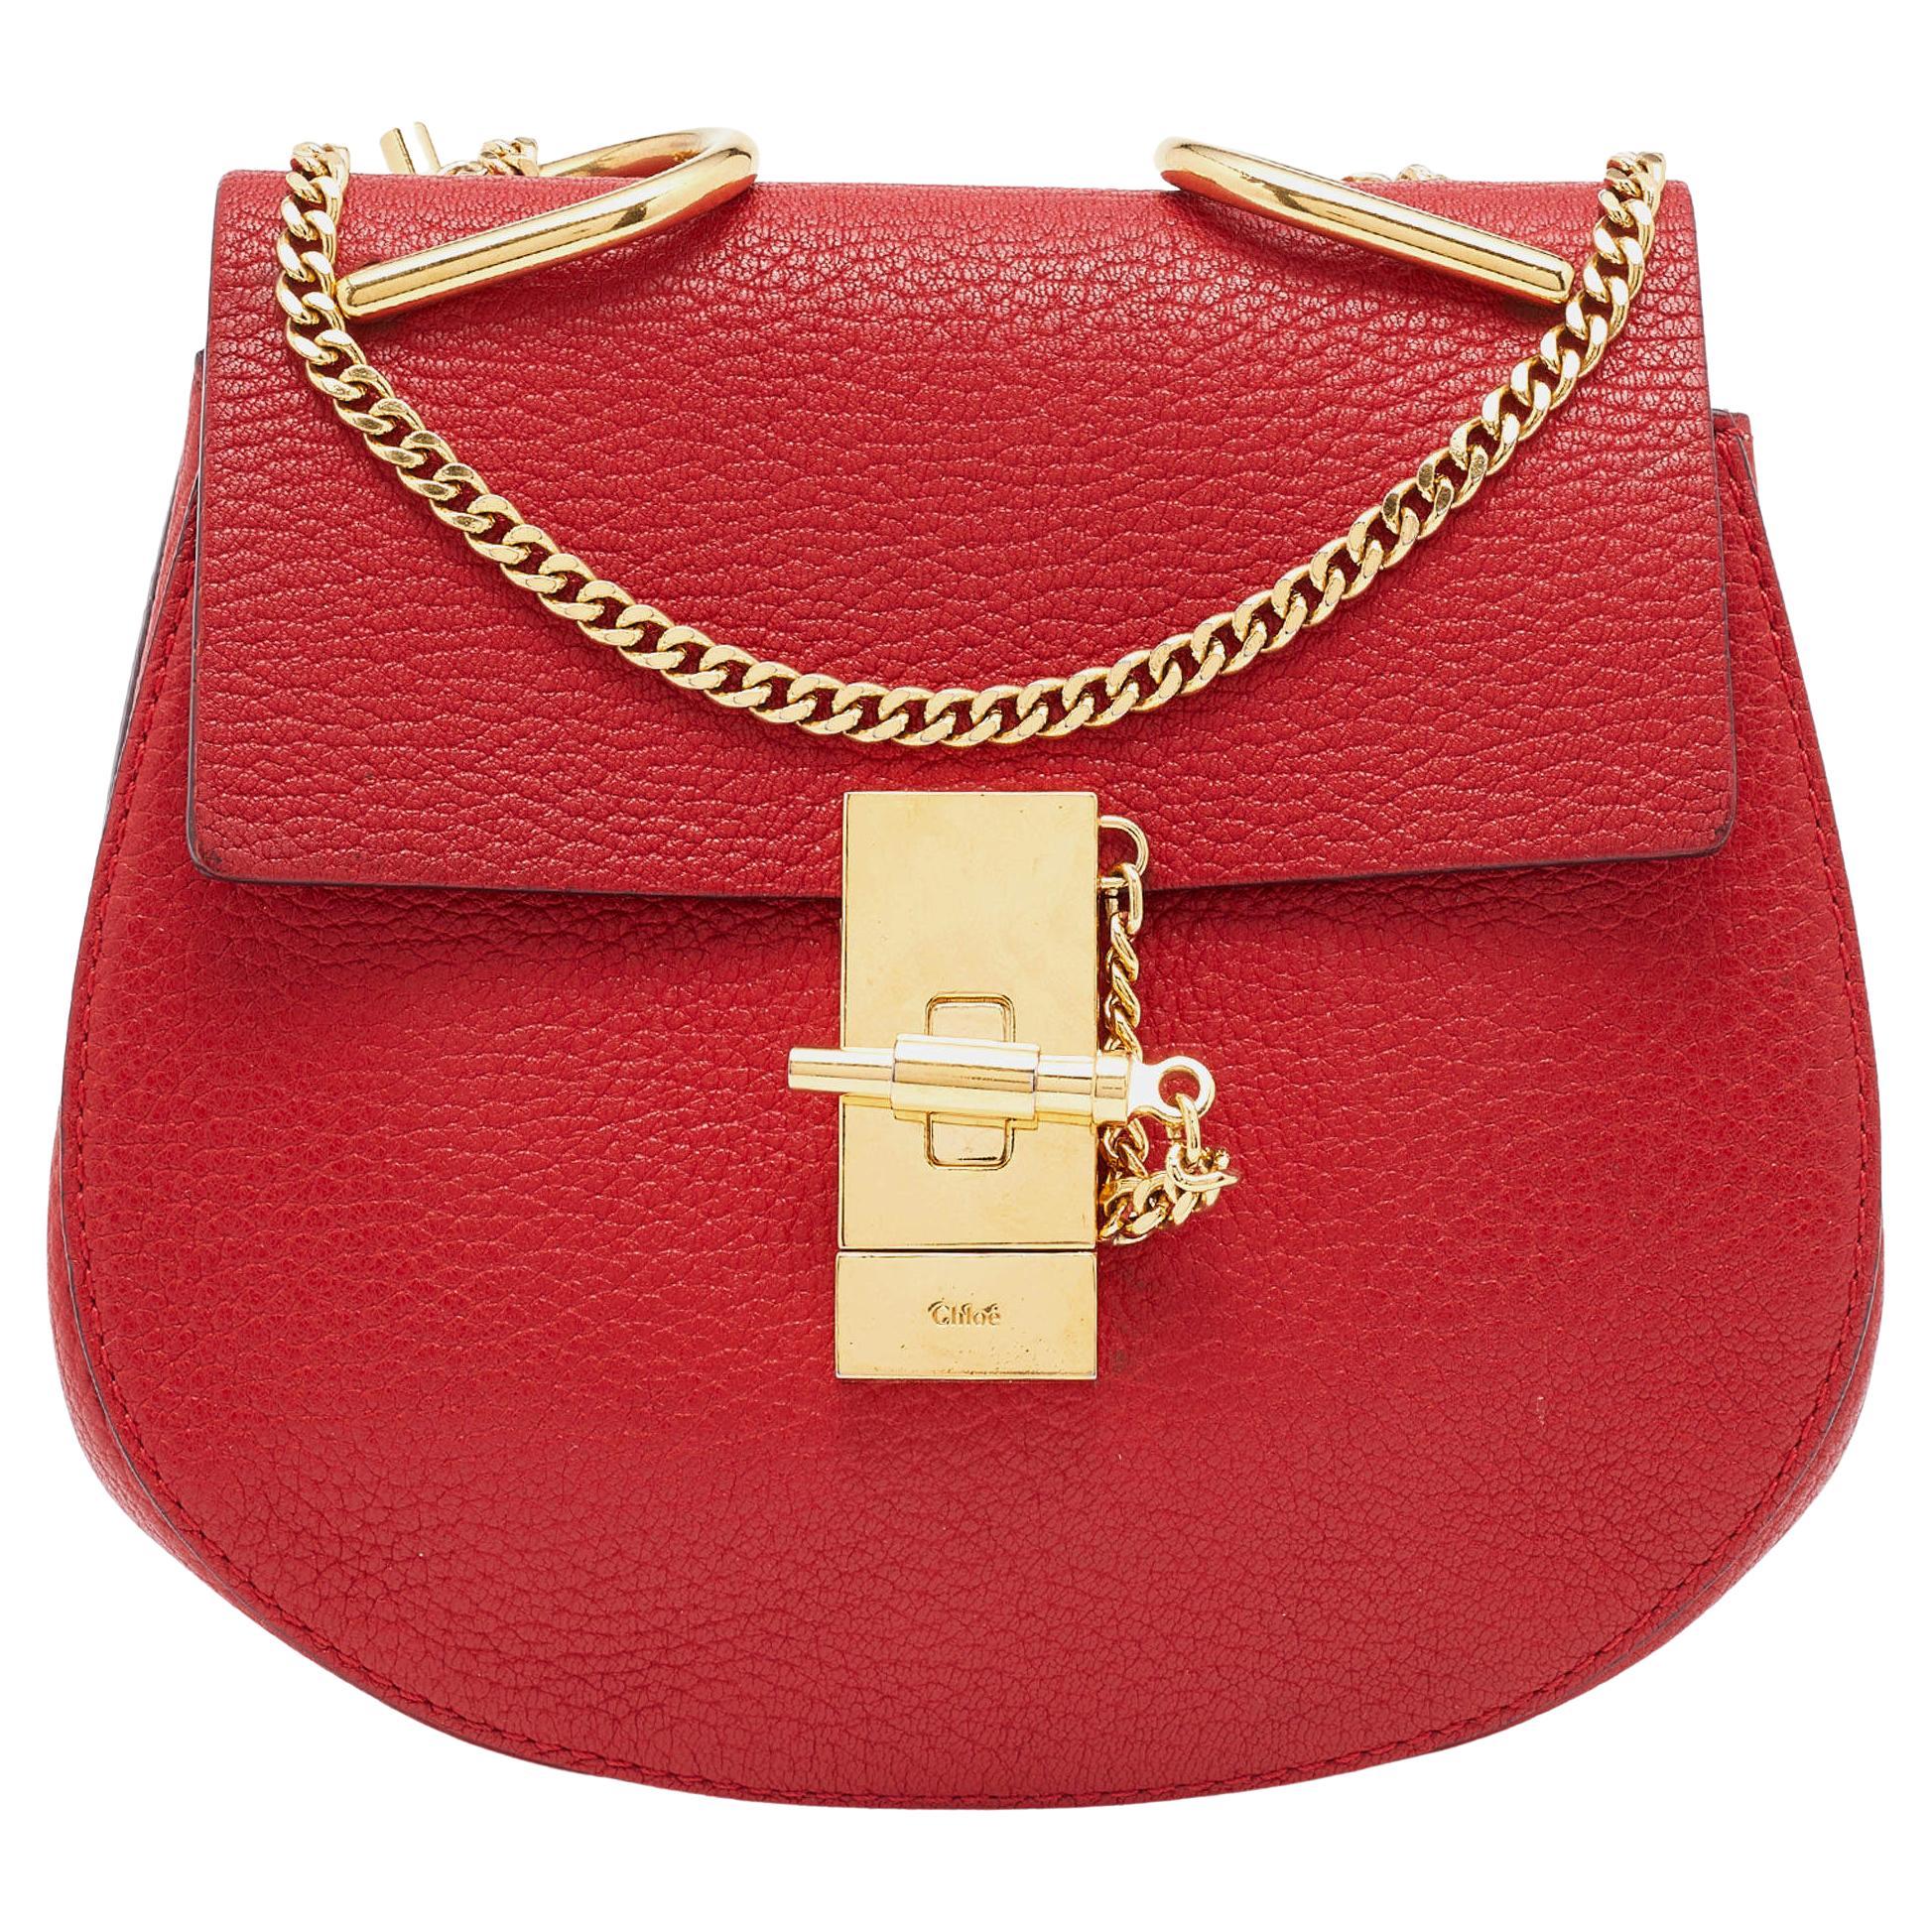 Chloe Red Leather Small Drew Chain Crossbody Bag